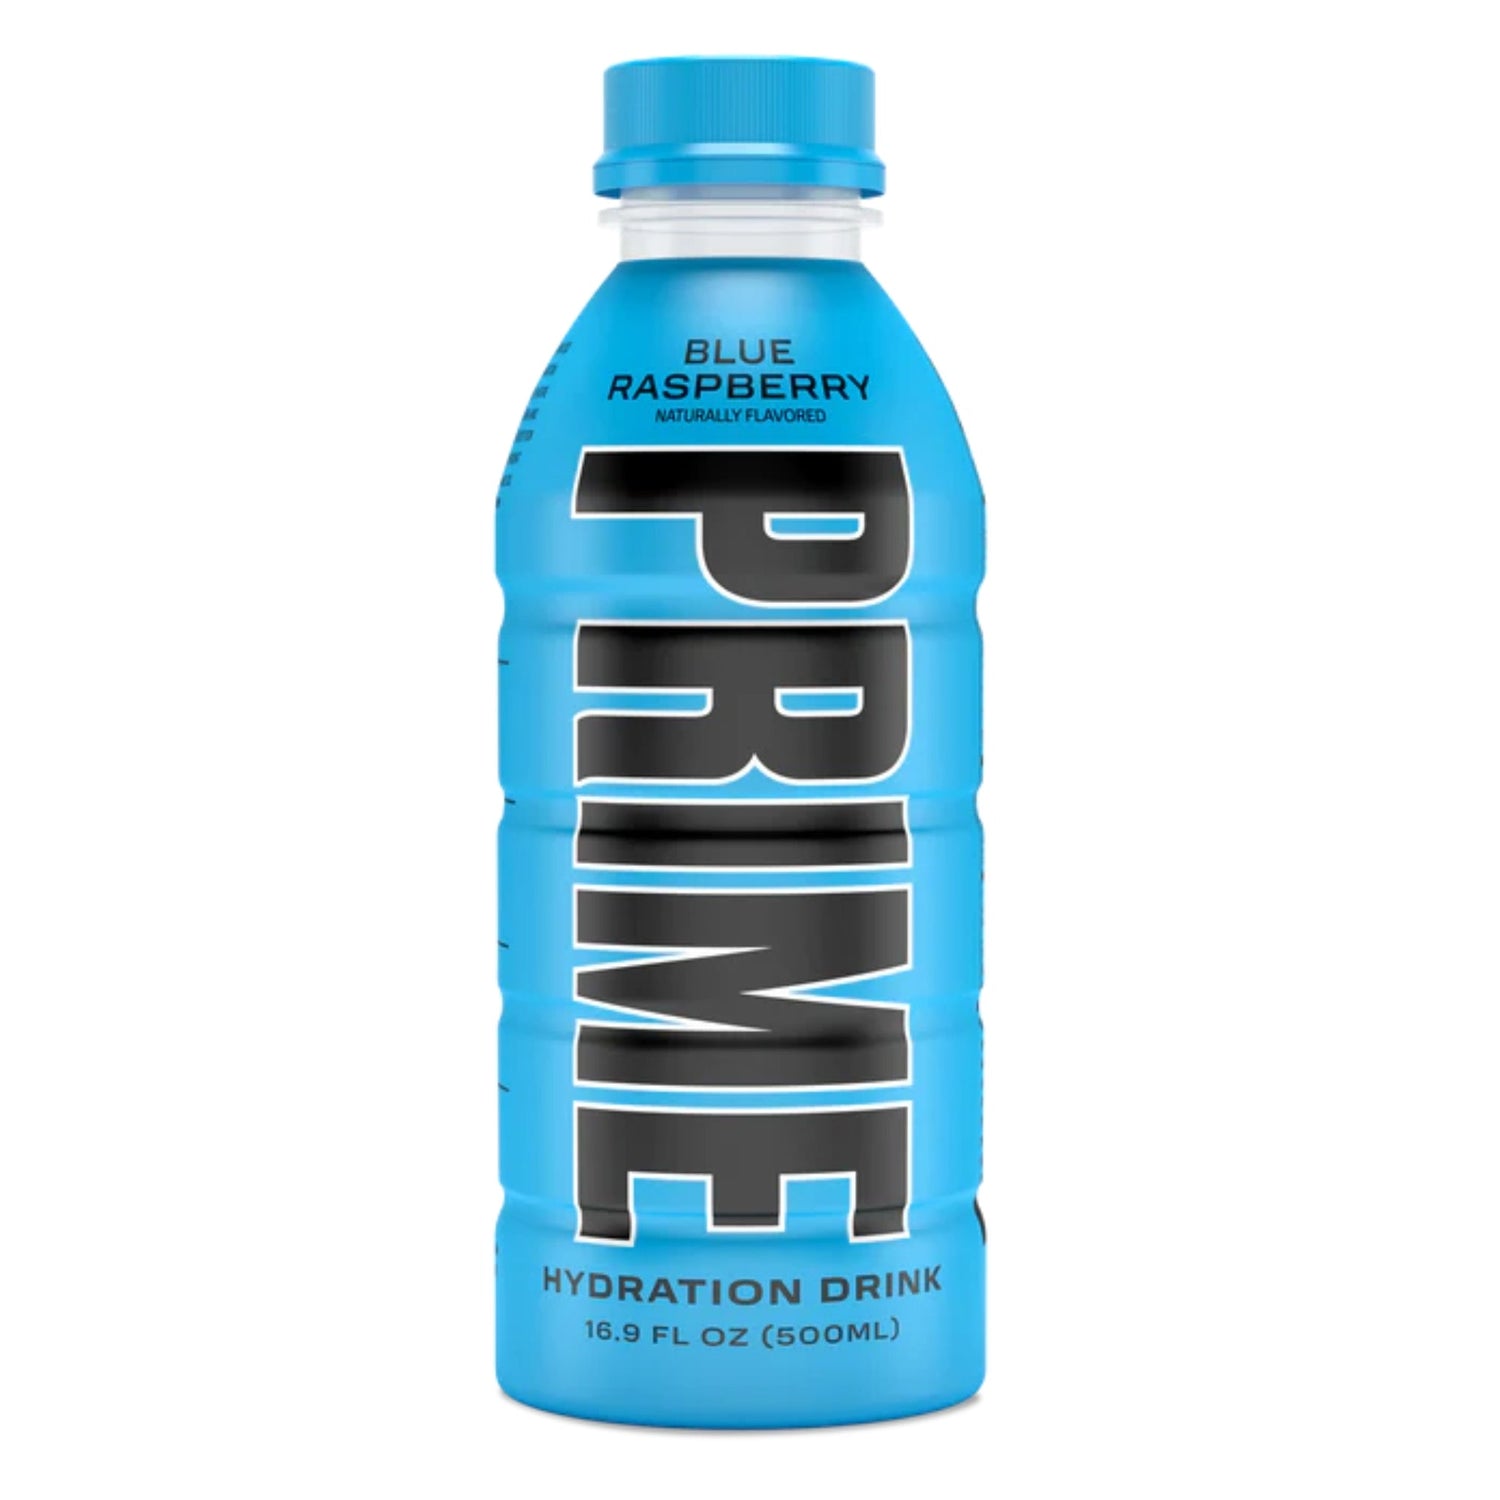 Prime Hydration RTD